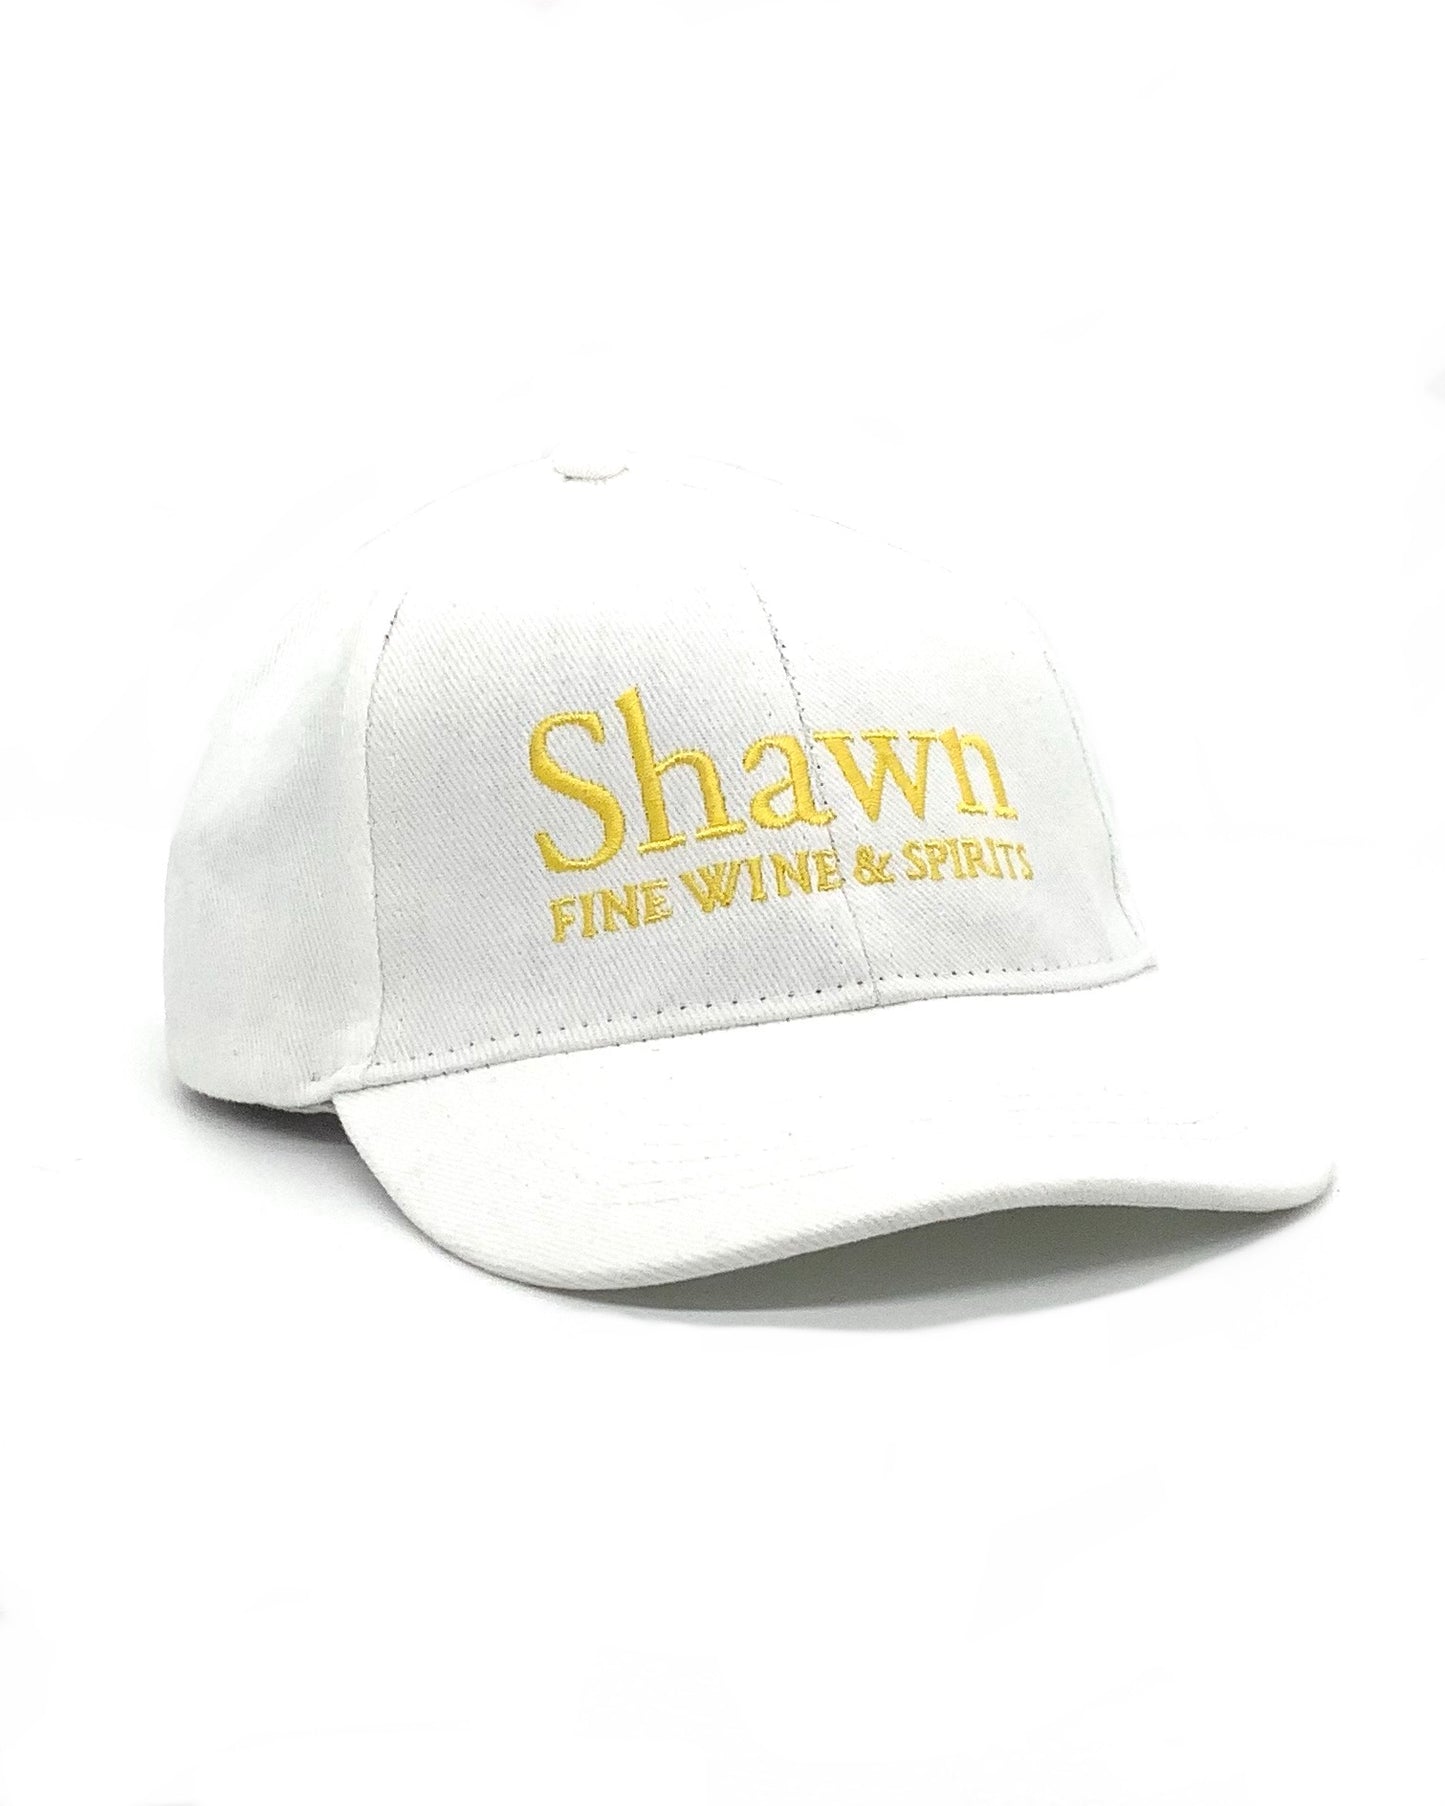 Shawn Wine Baseball Cap (White) merch